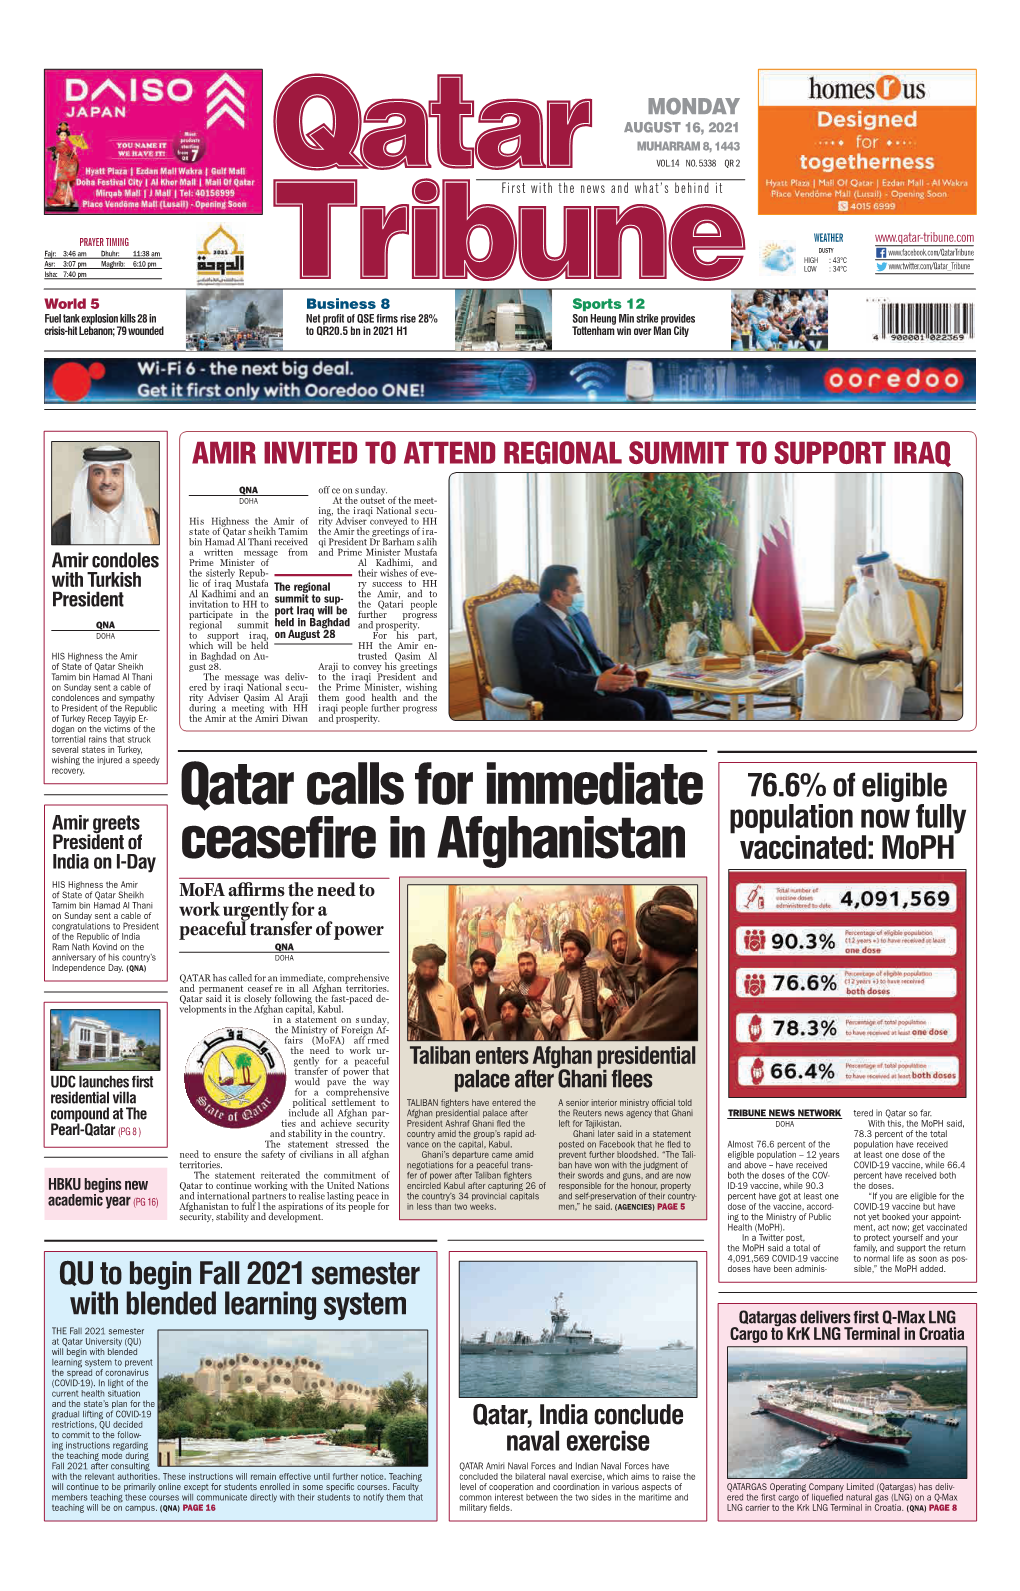 Qatar Calls for Immediate Ceasefire in Afghanistan